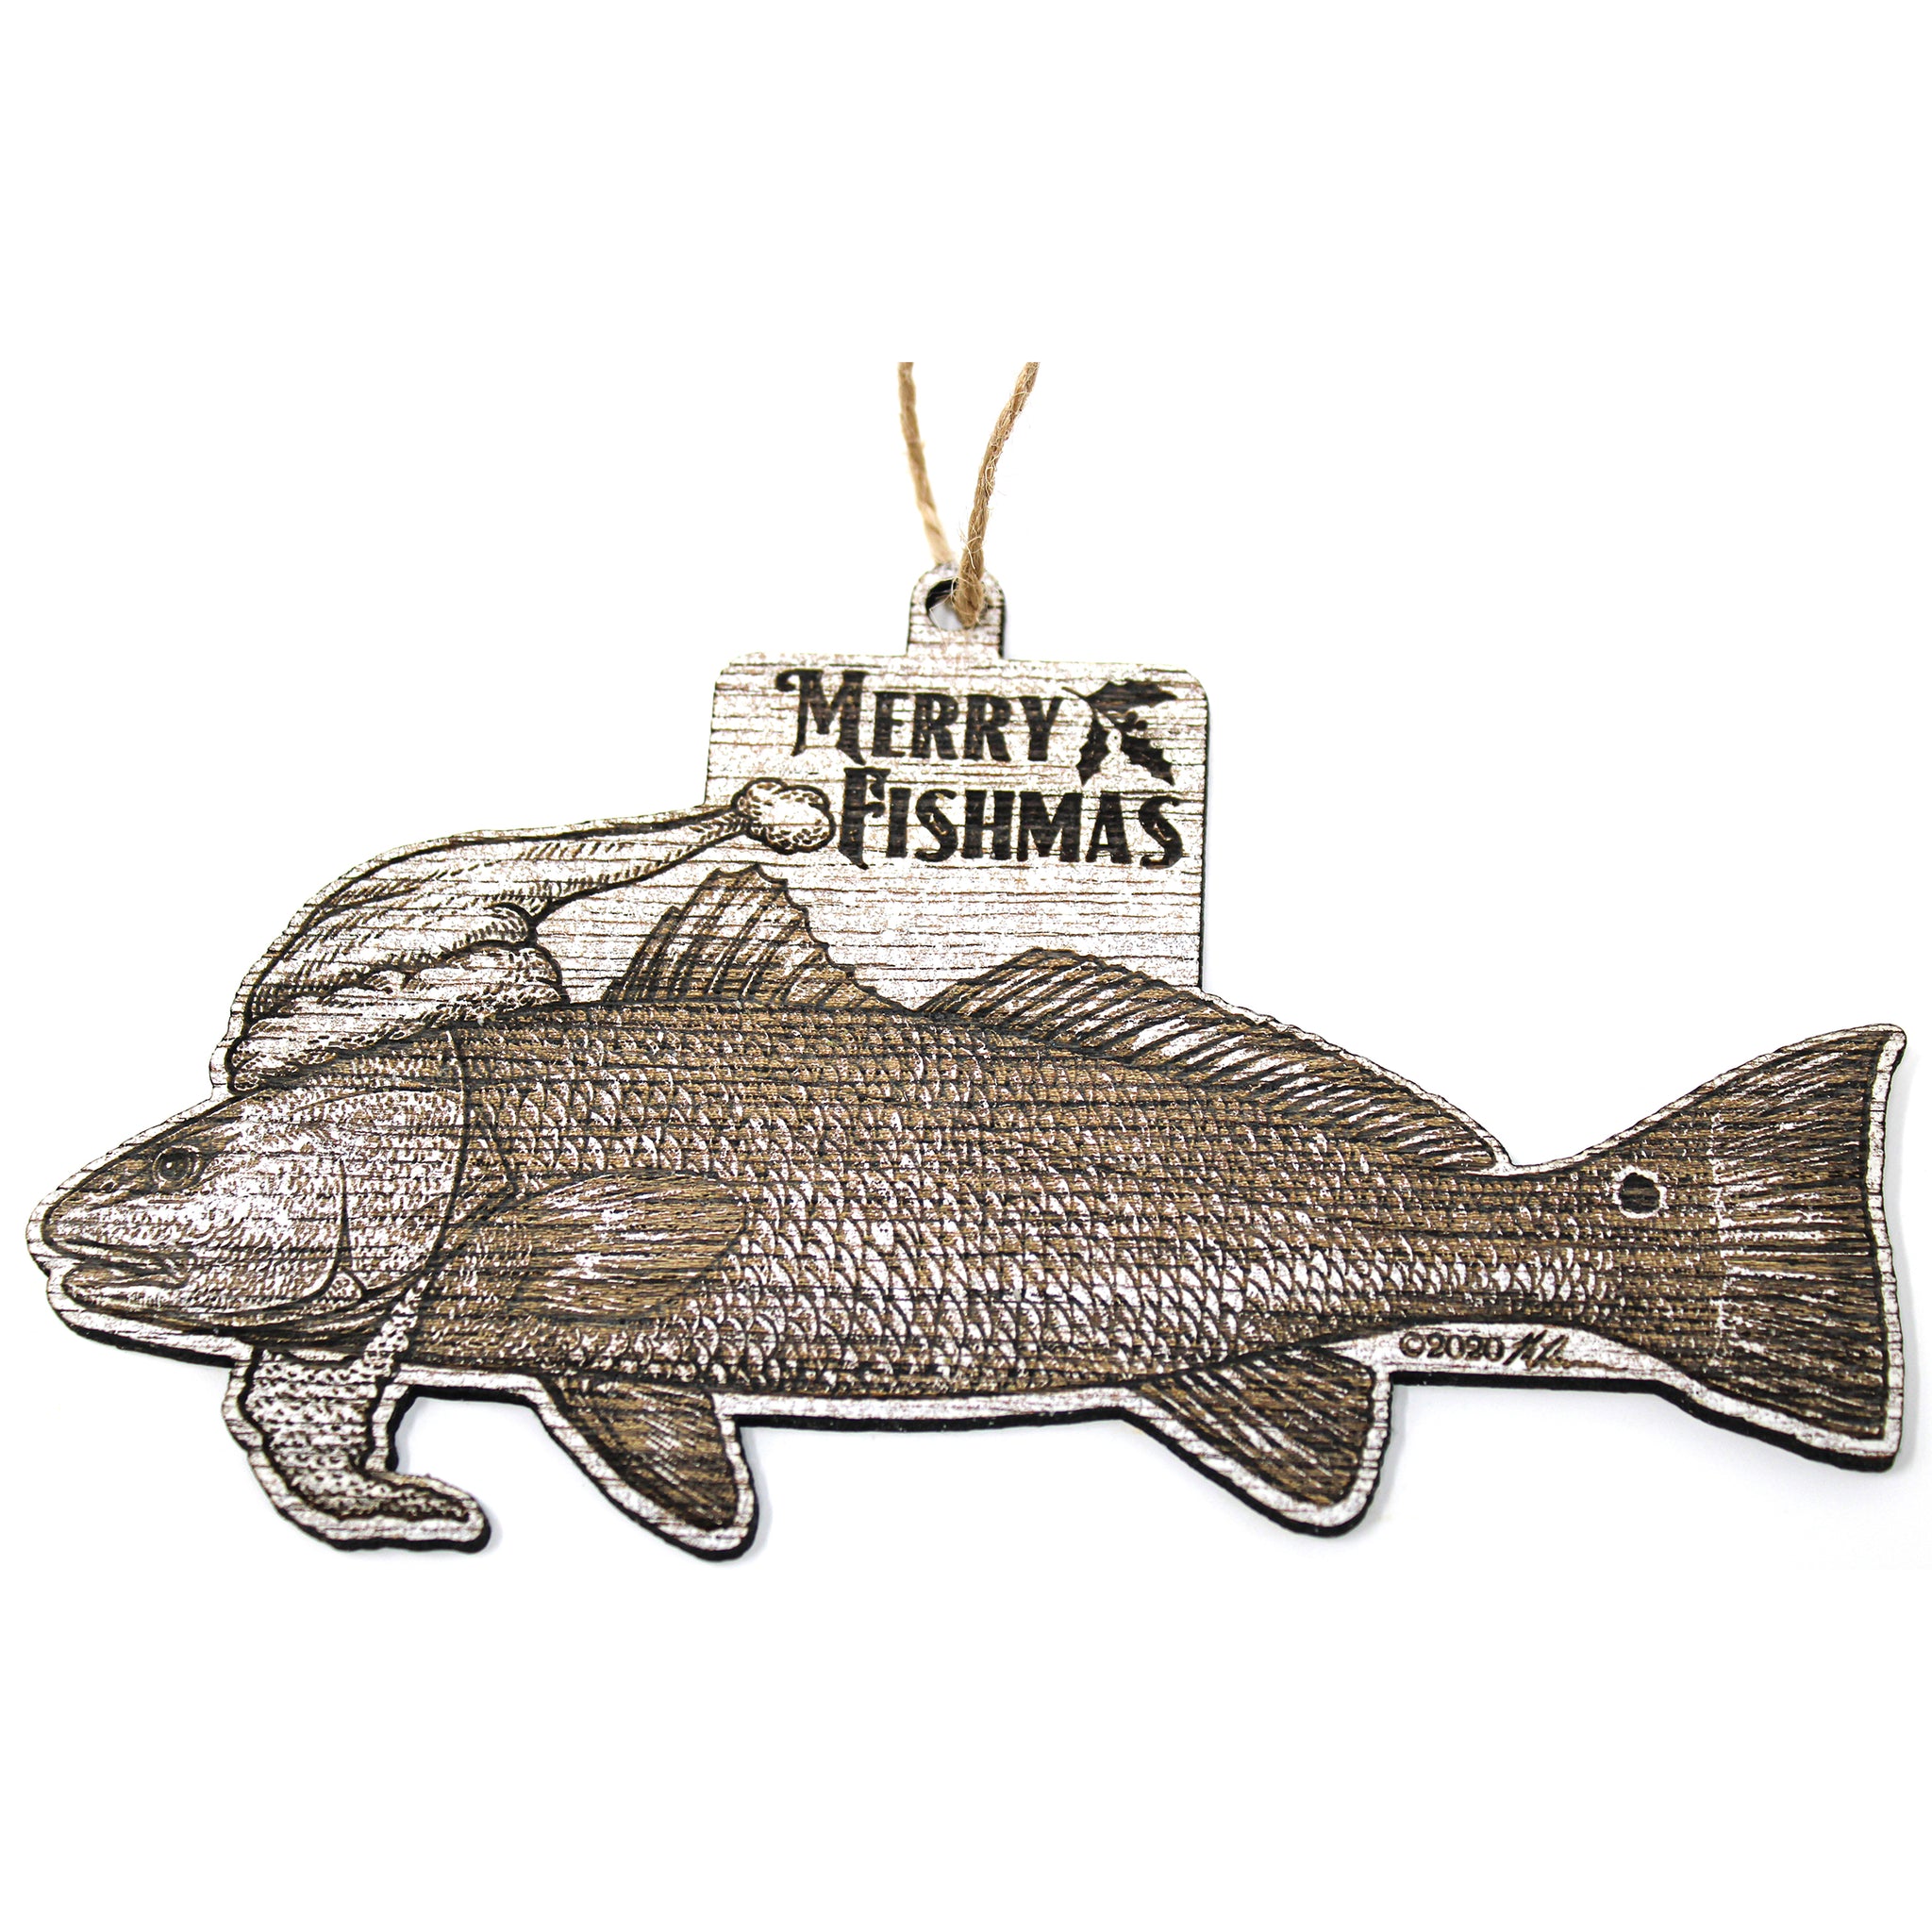 Wood Christmas Ornaments - Inshore Slam Fishmas Ornaments